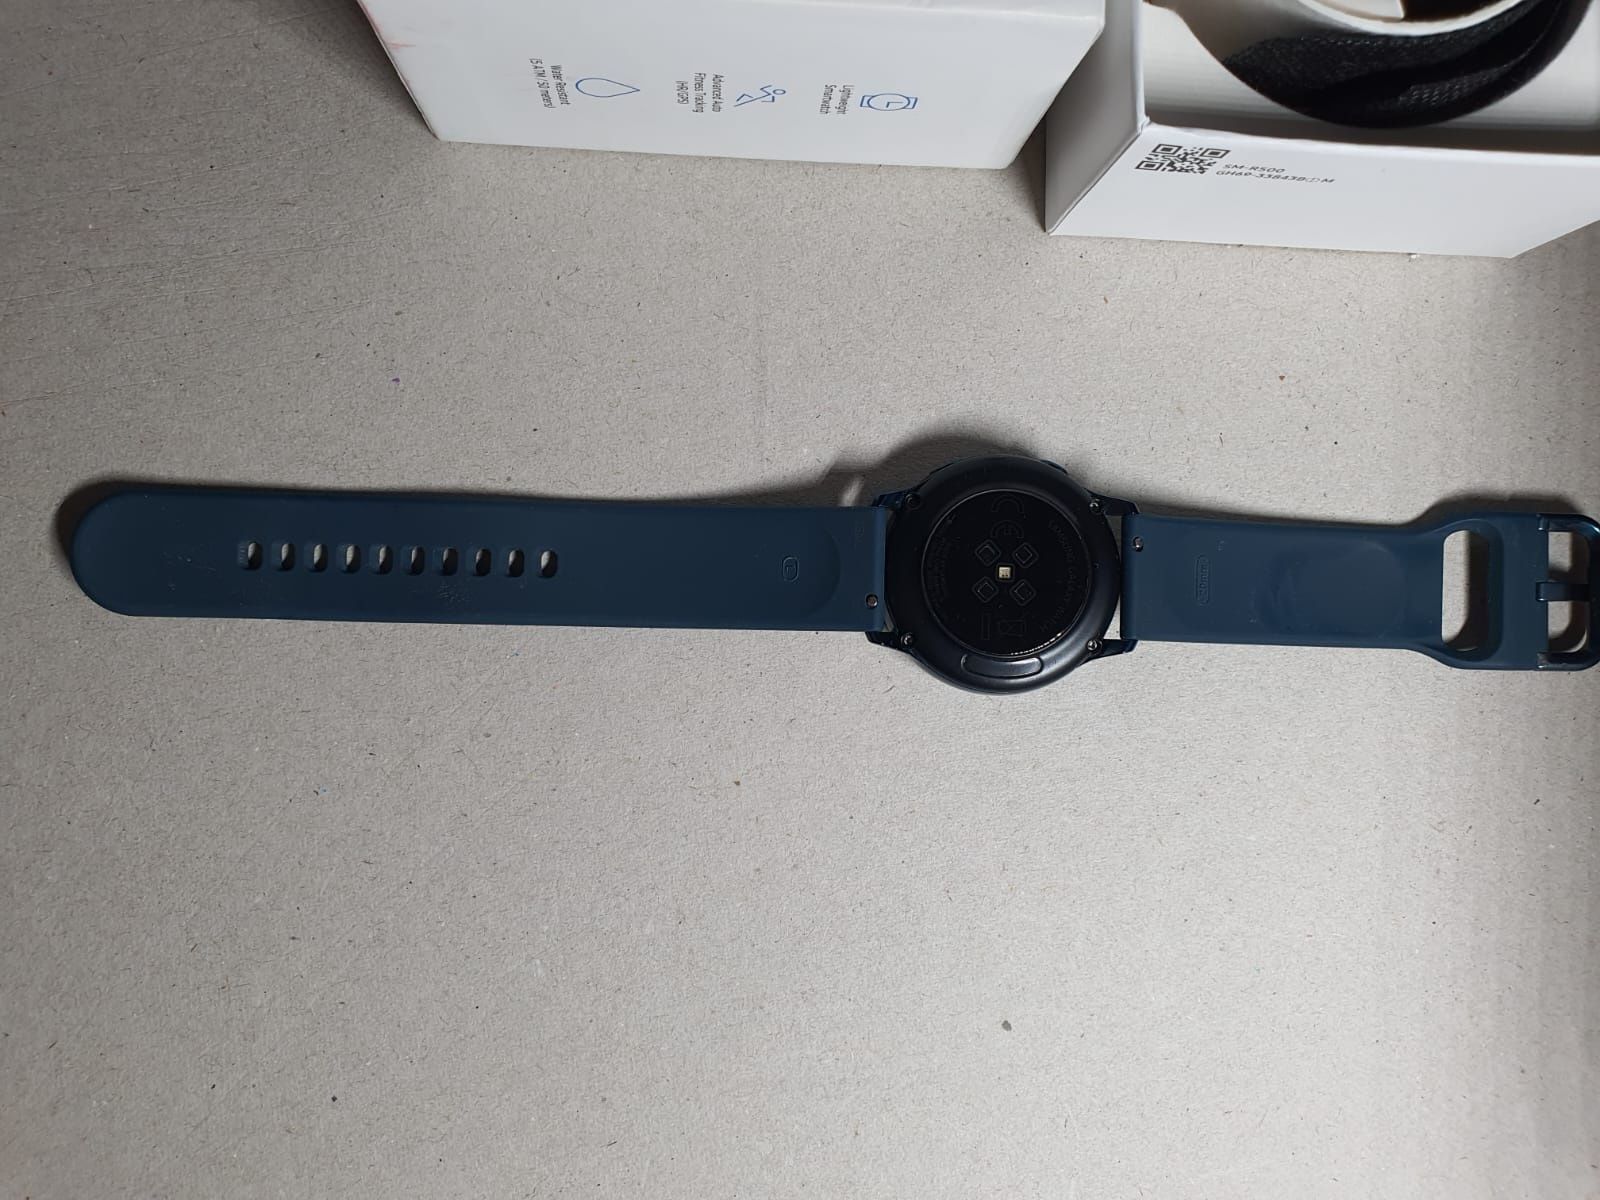 Samsung smart watch active, buton home defect